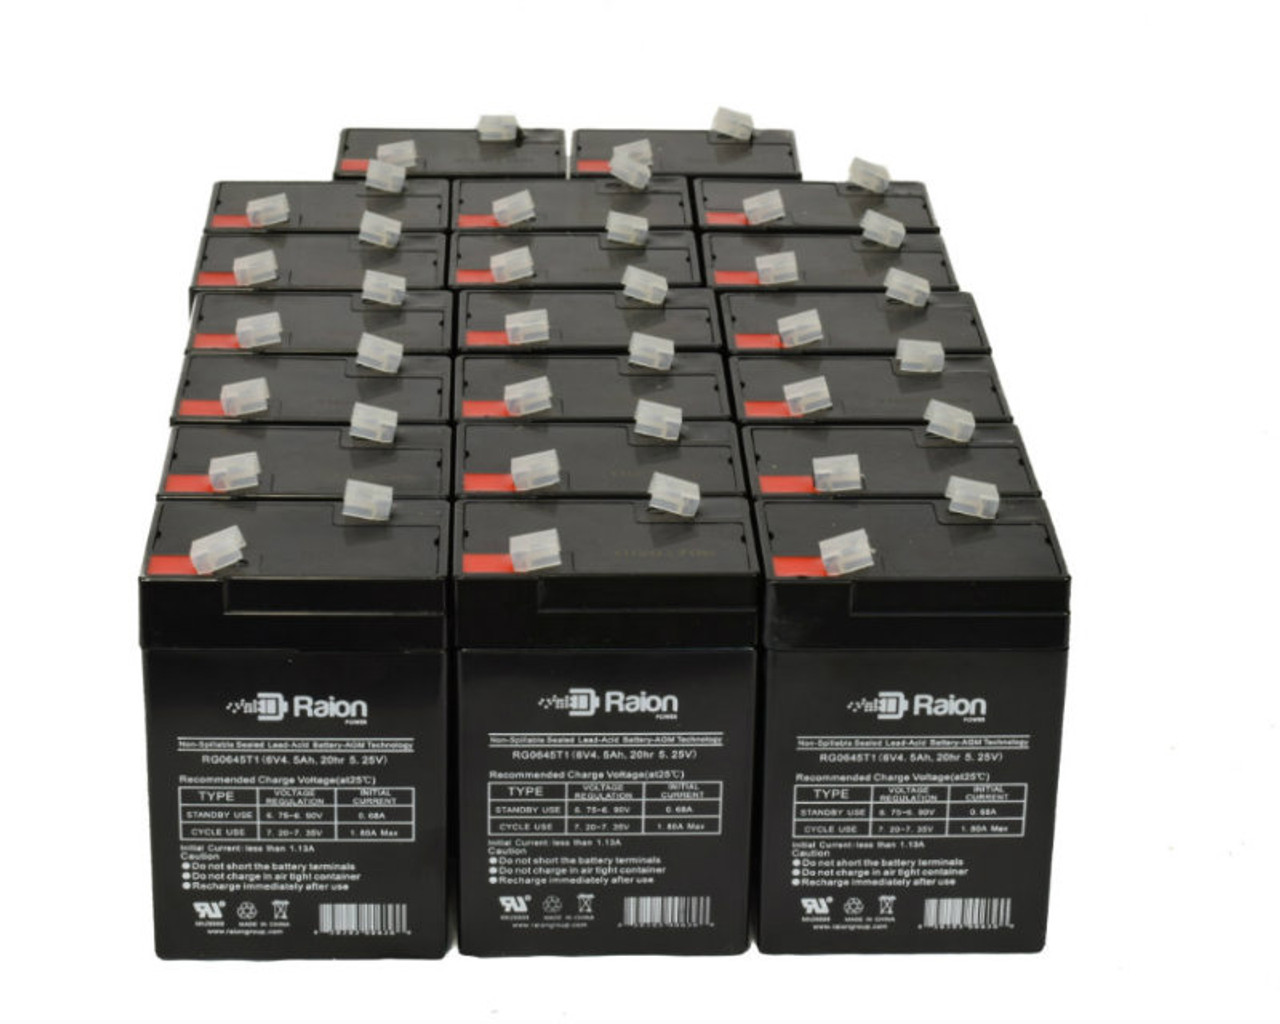 Raion Power 6V 4.5Ah Replacement Emergency Light Battery for Teledyne 2PH6S5 - 20 Pack